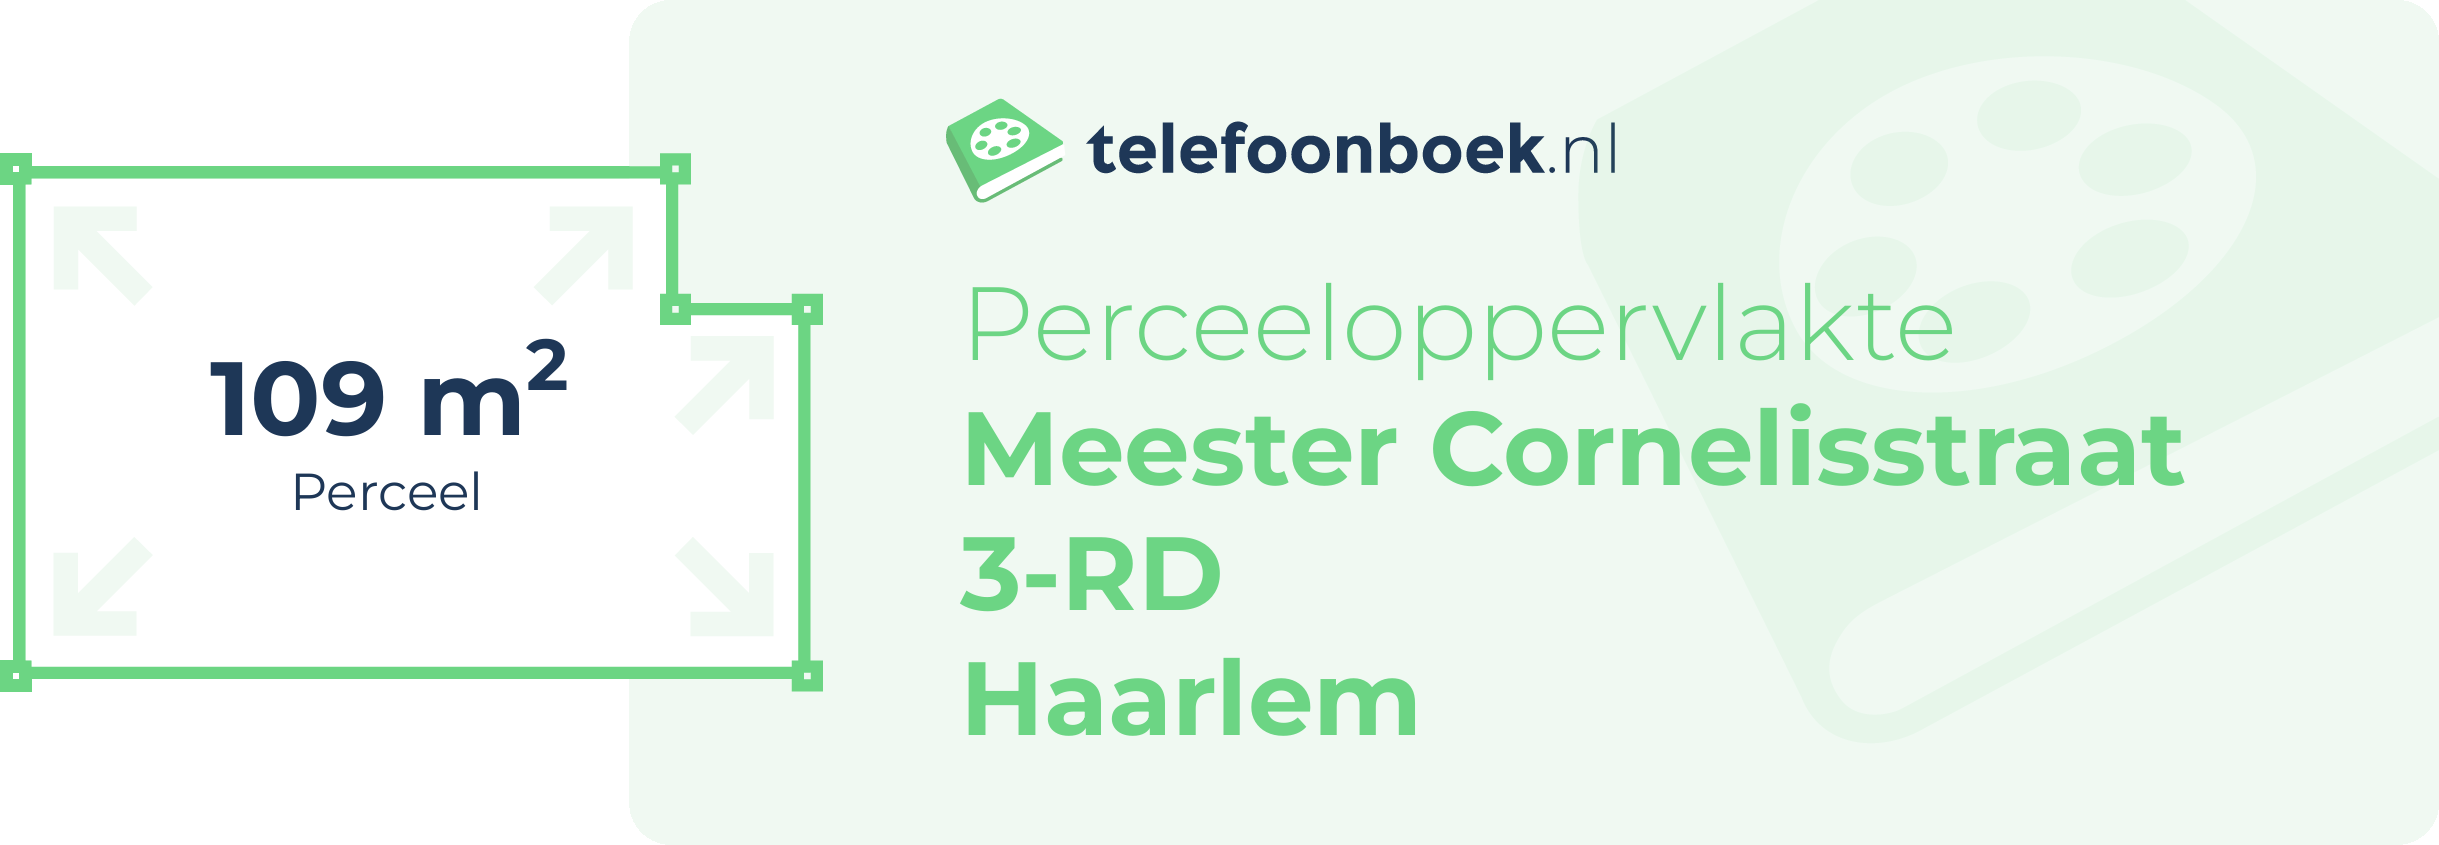 Perceeloppervlakte Meester Cornelisstraat 3-RD Haarlem